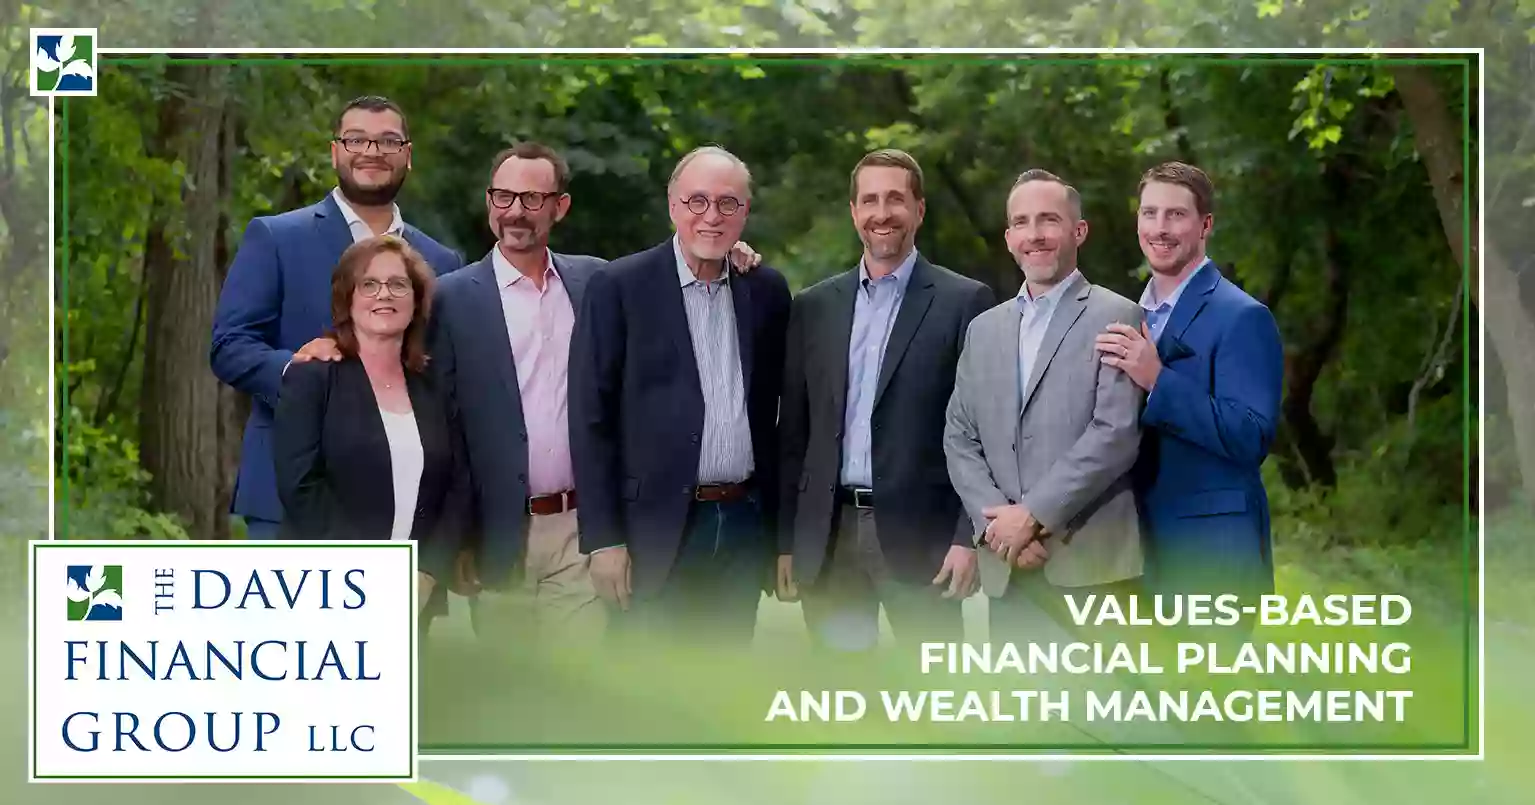 The Davis Financial Group Connecticut